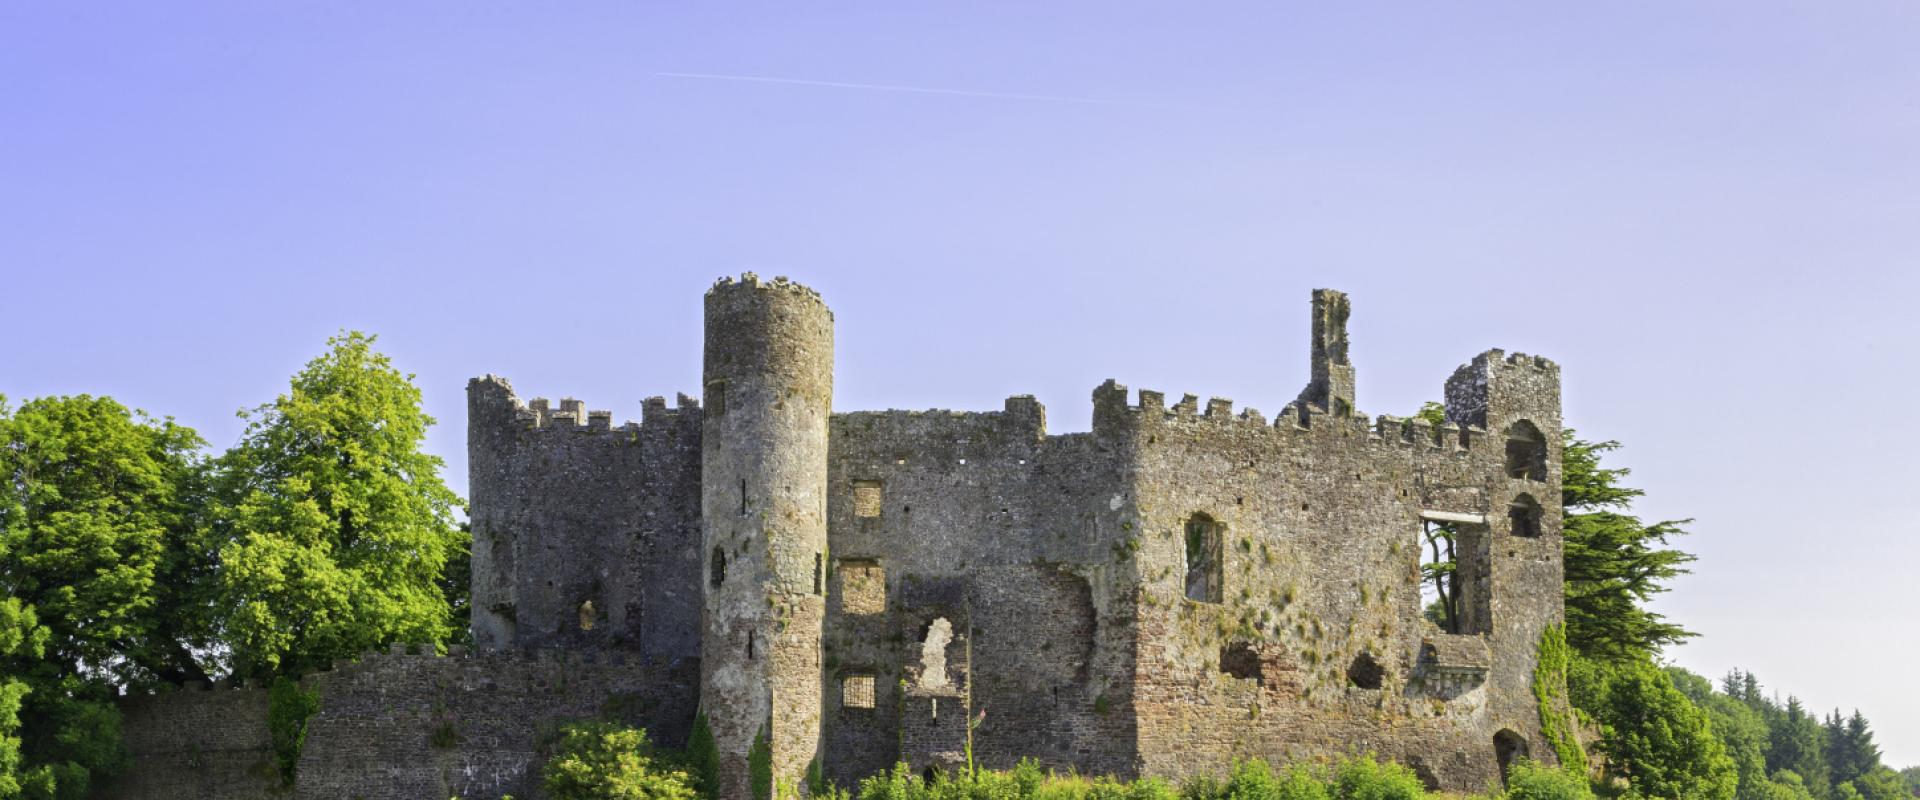 Castell Talacharn/Laugharne Castle